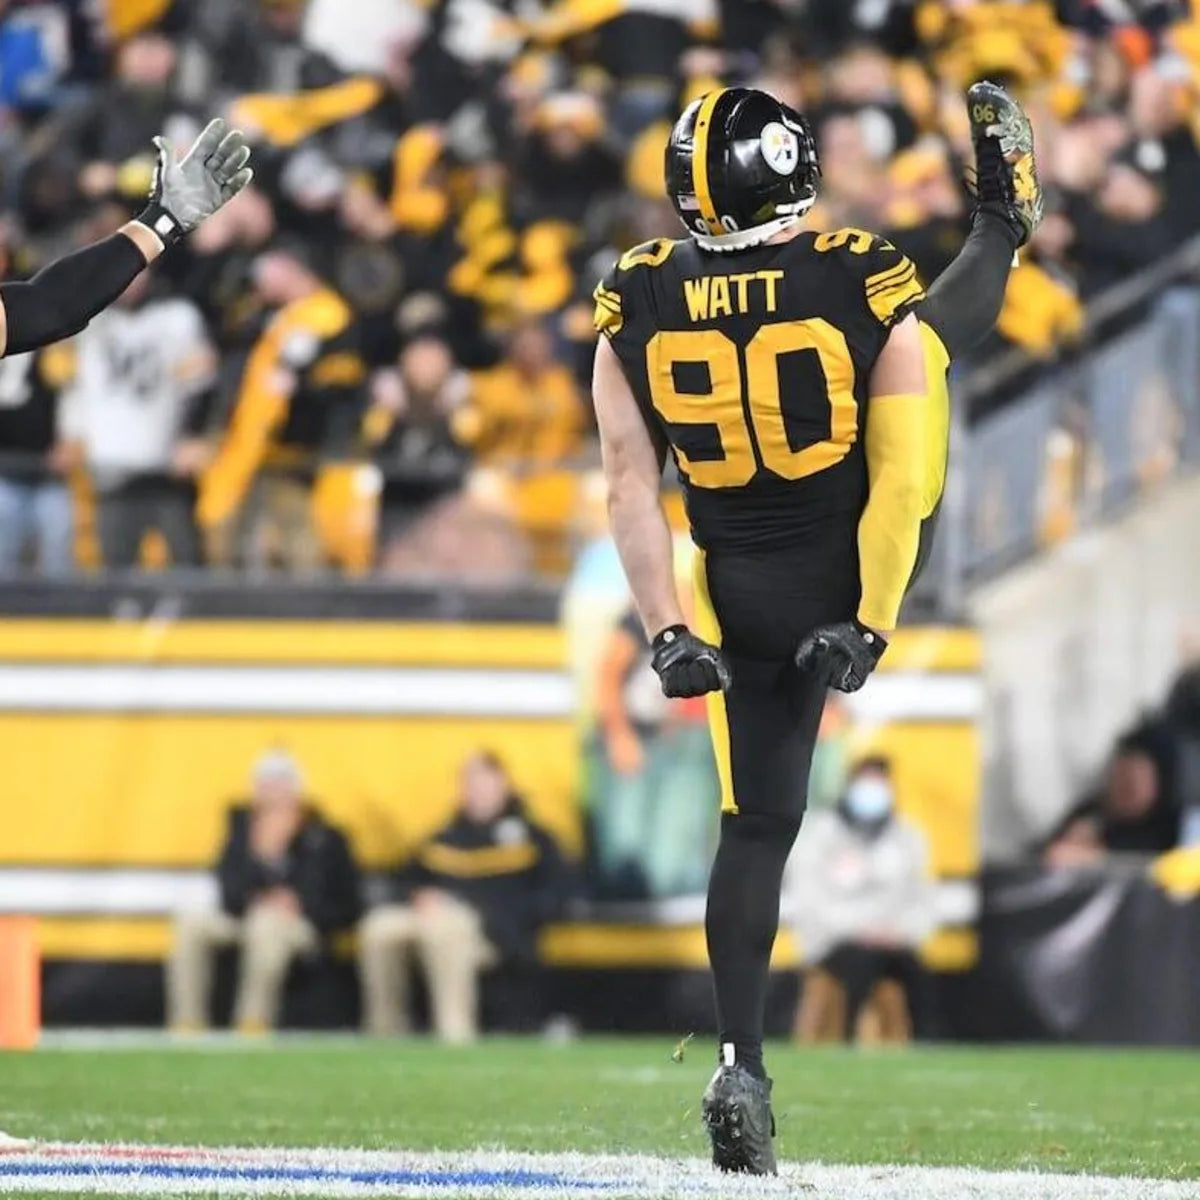 Pittsburgh Steelers T.j. Watt Nike NFL Men's Limited Color Rush Jersey